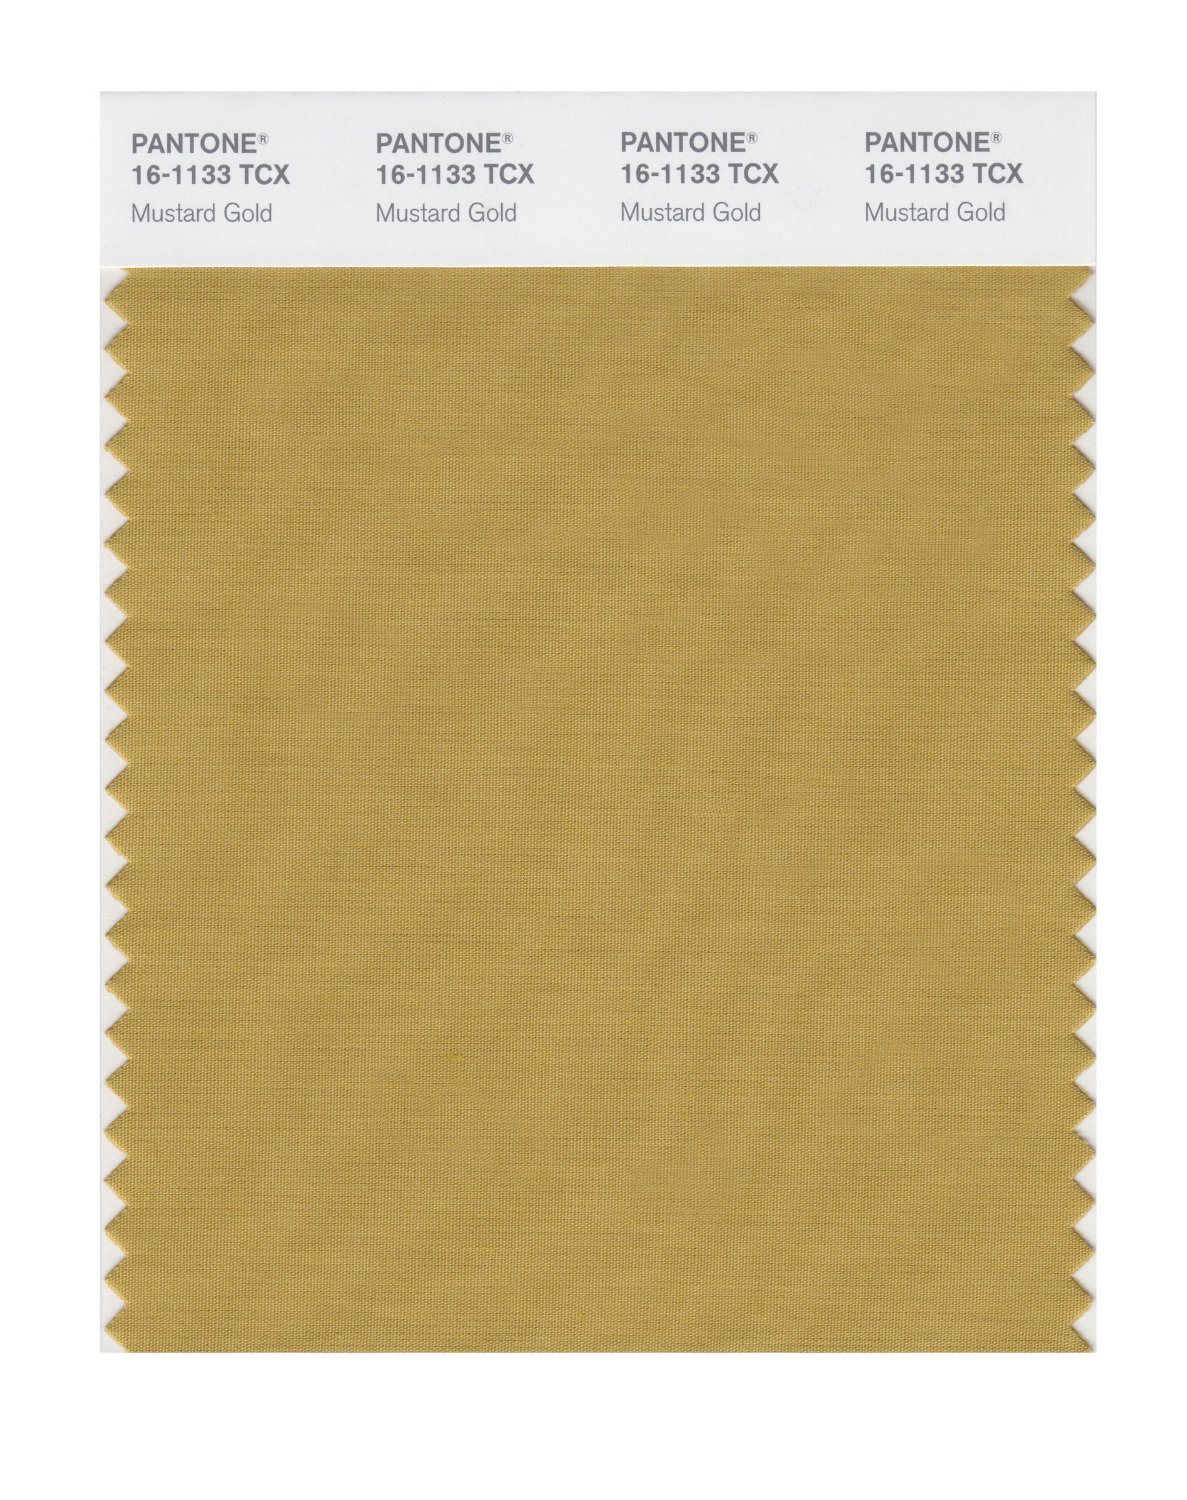 Pantone Cotton Swatch 16-1133 Mustard Gold